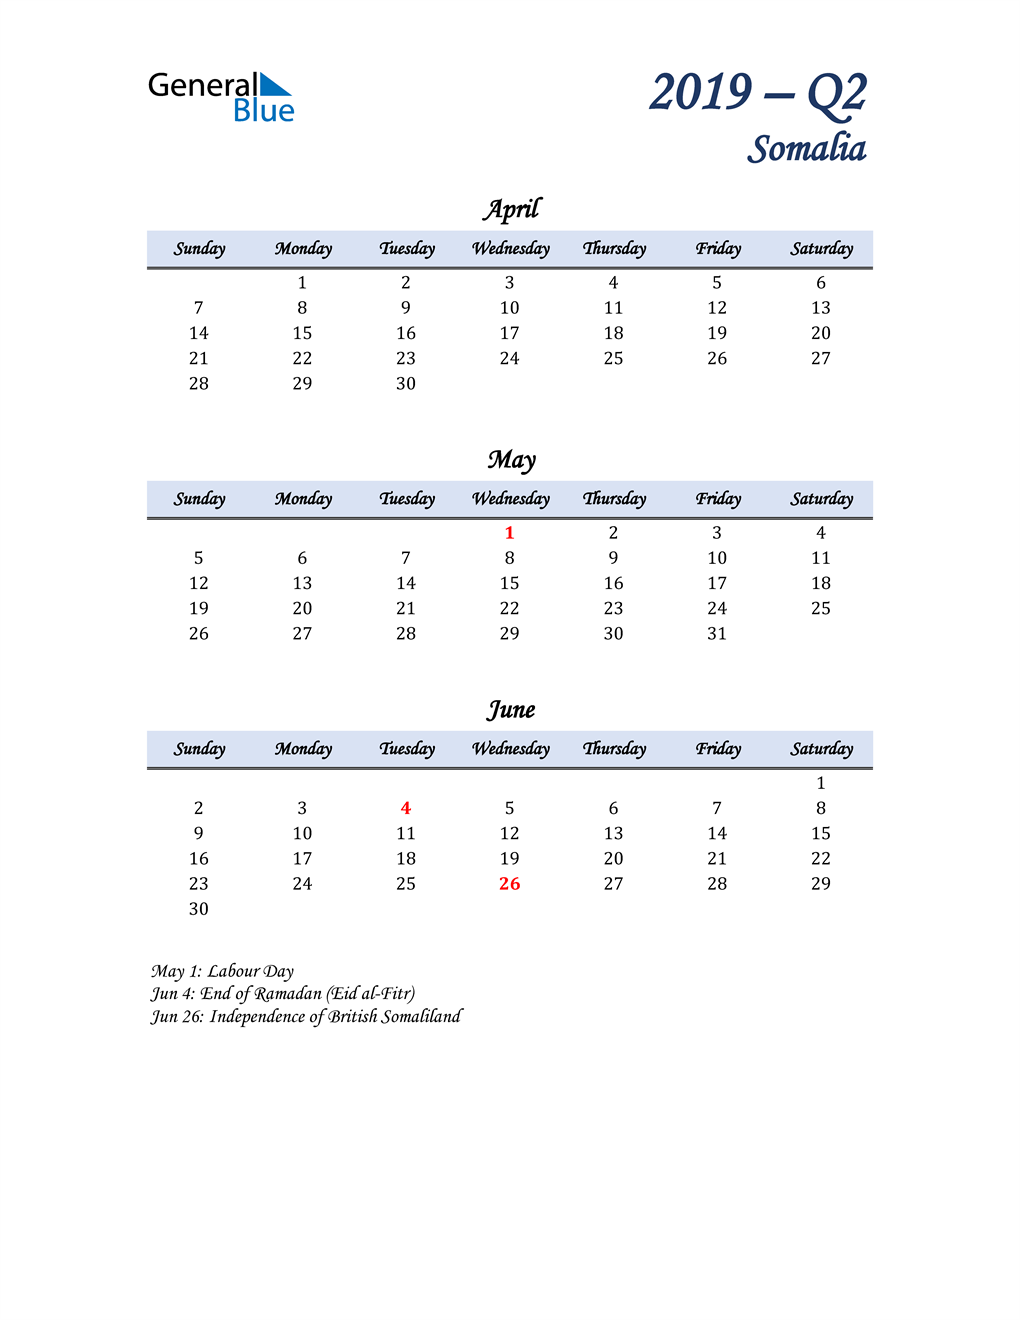  April, May, and June Calendar for Somalia